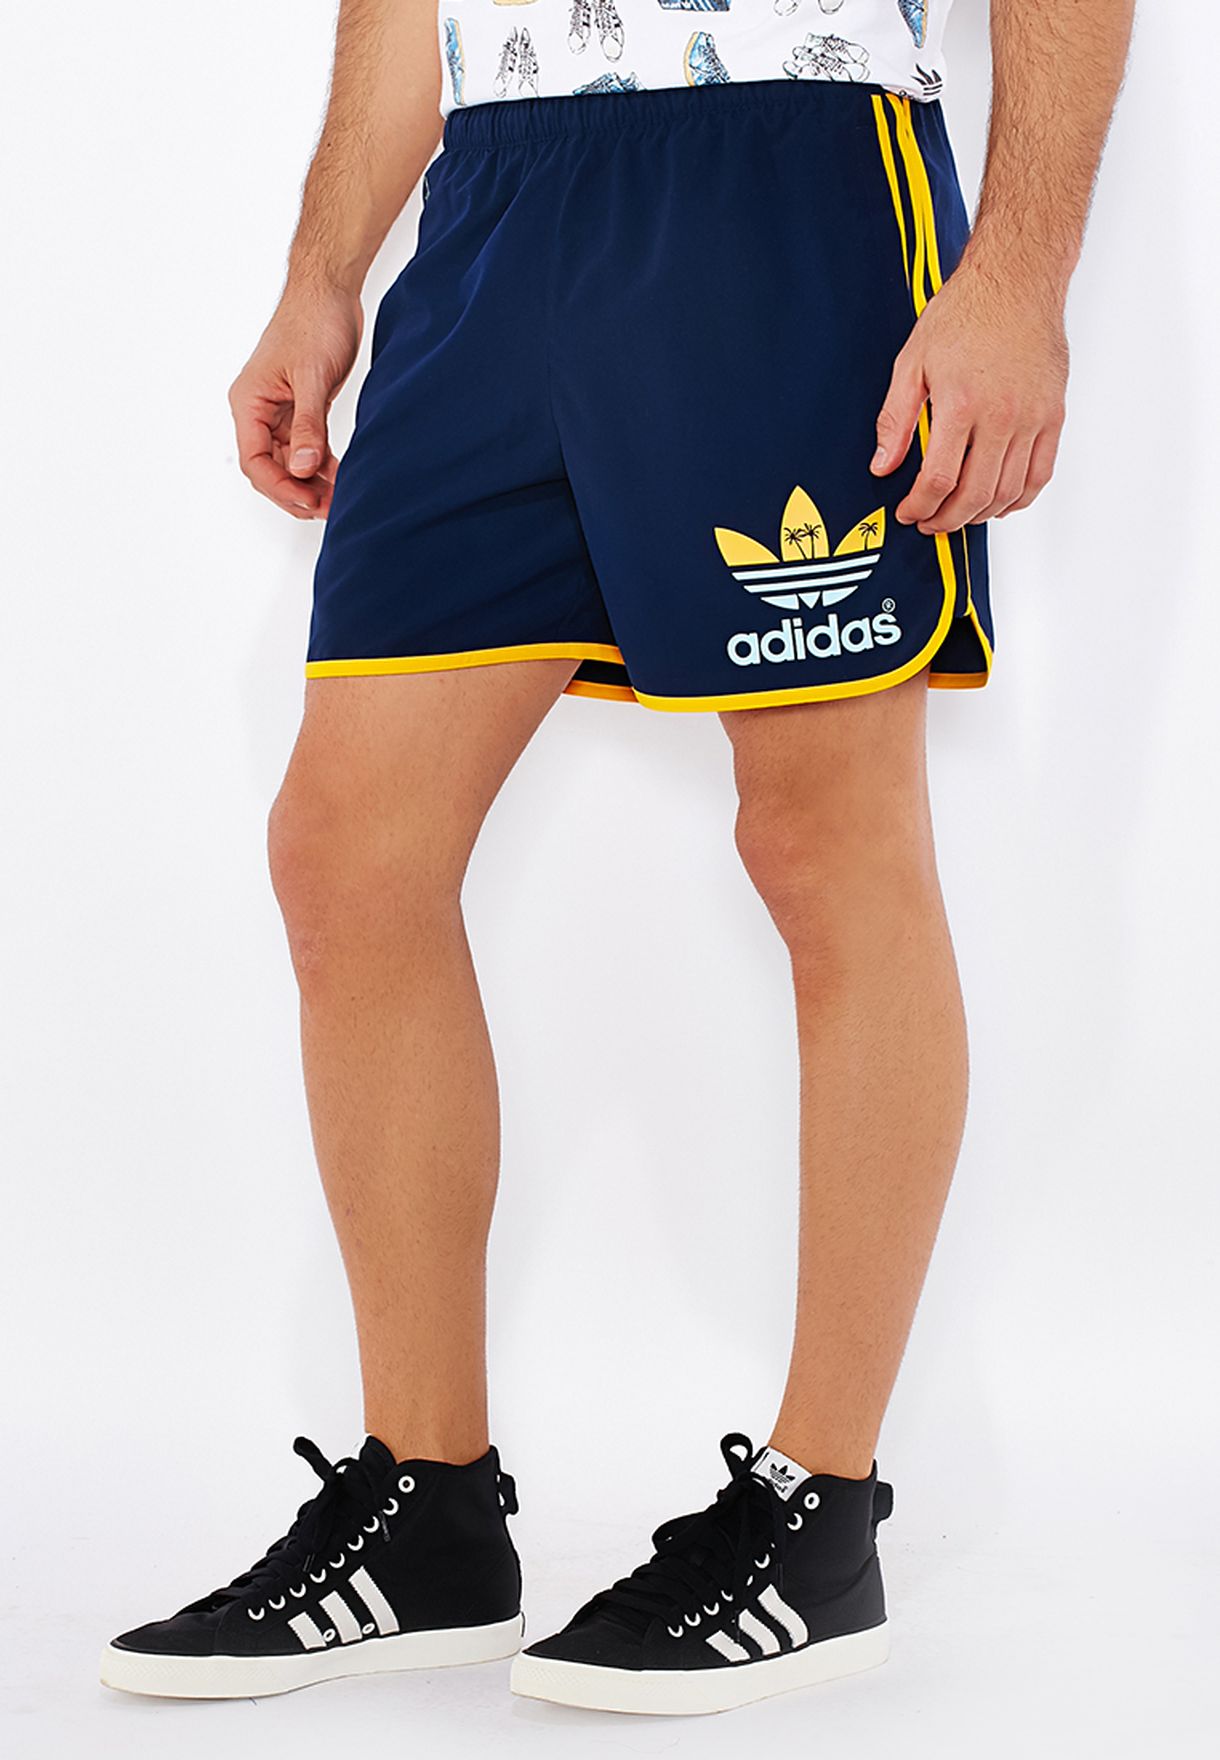 adidas island shorts